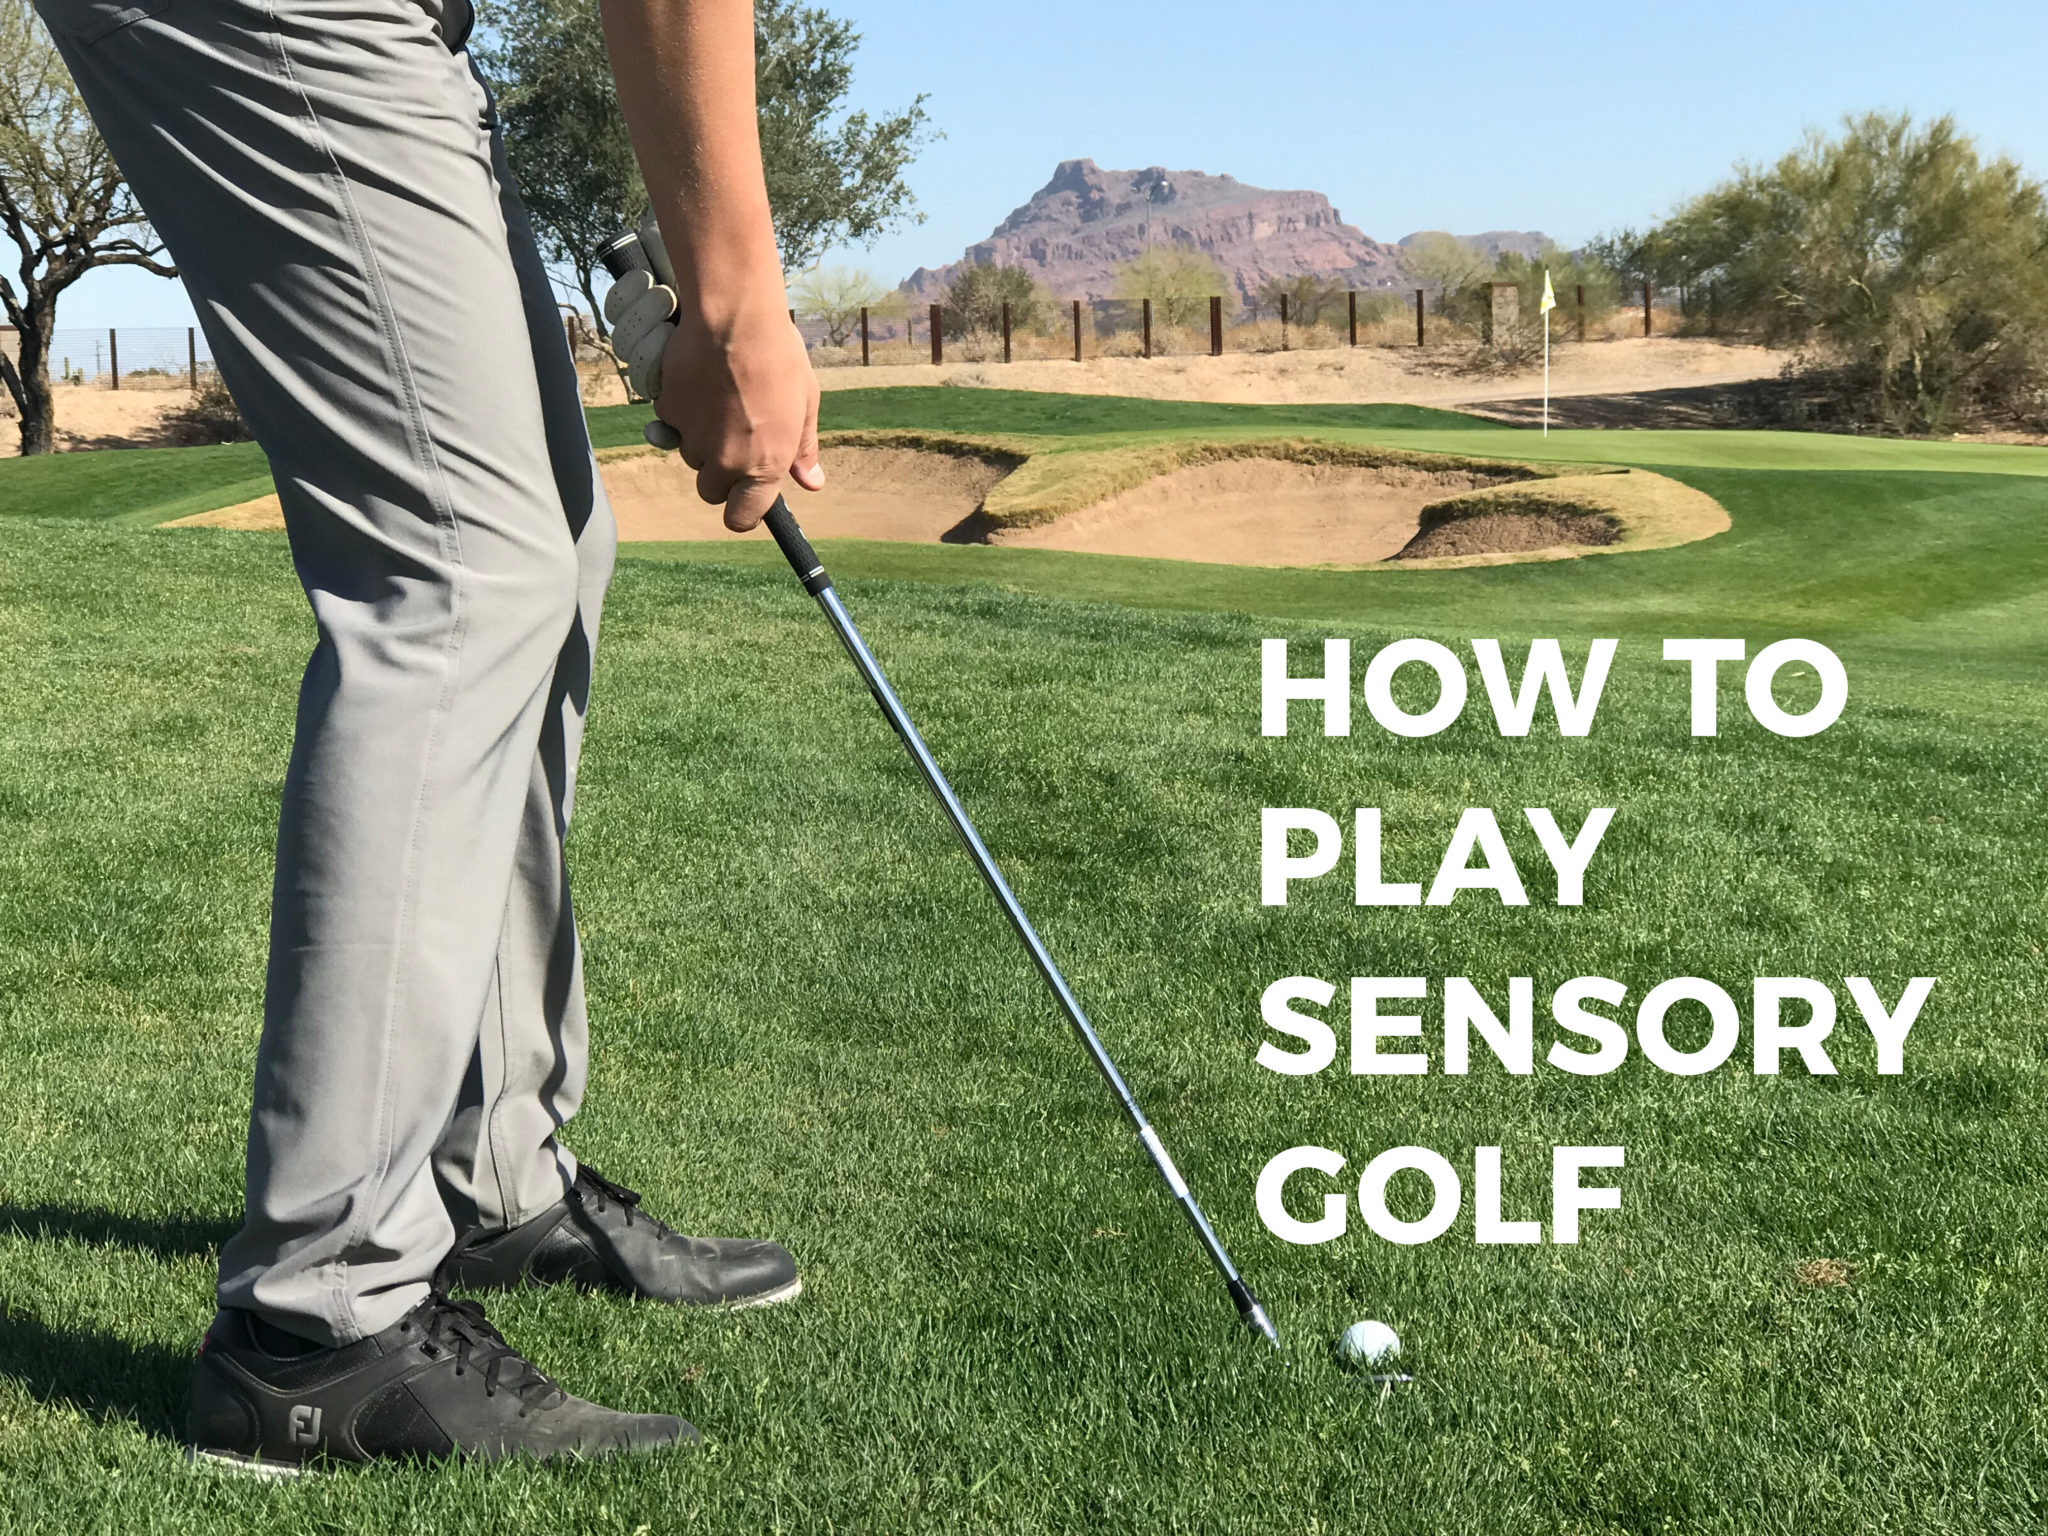 Sensory Golf